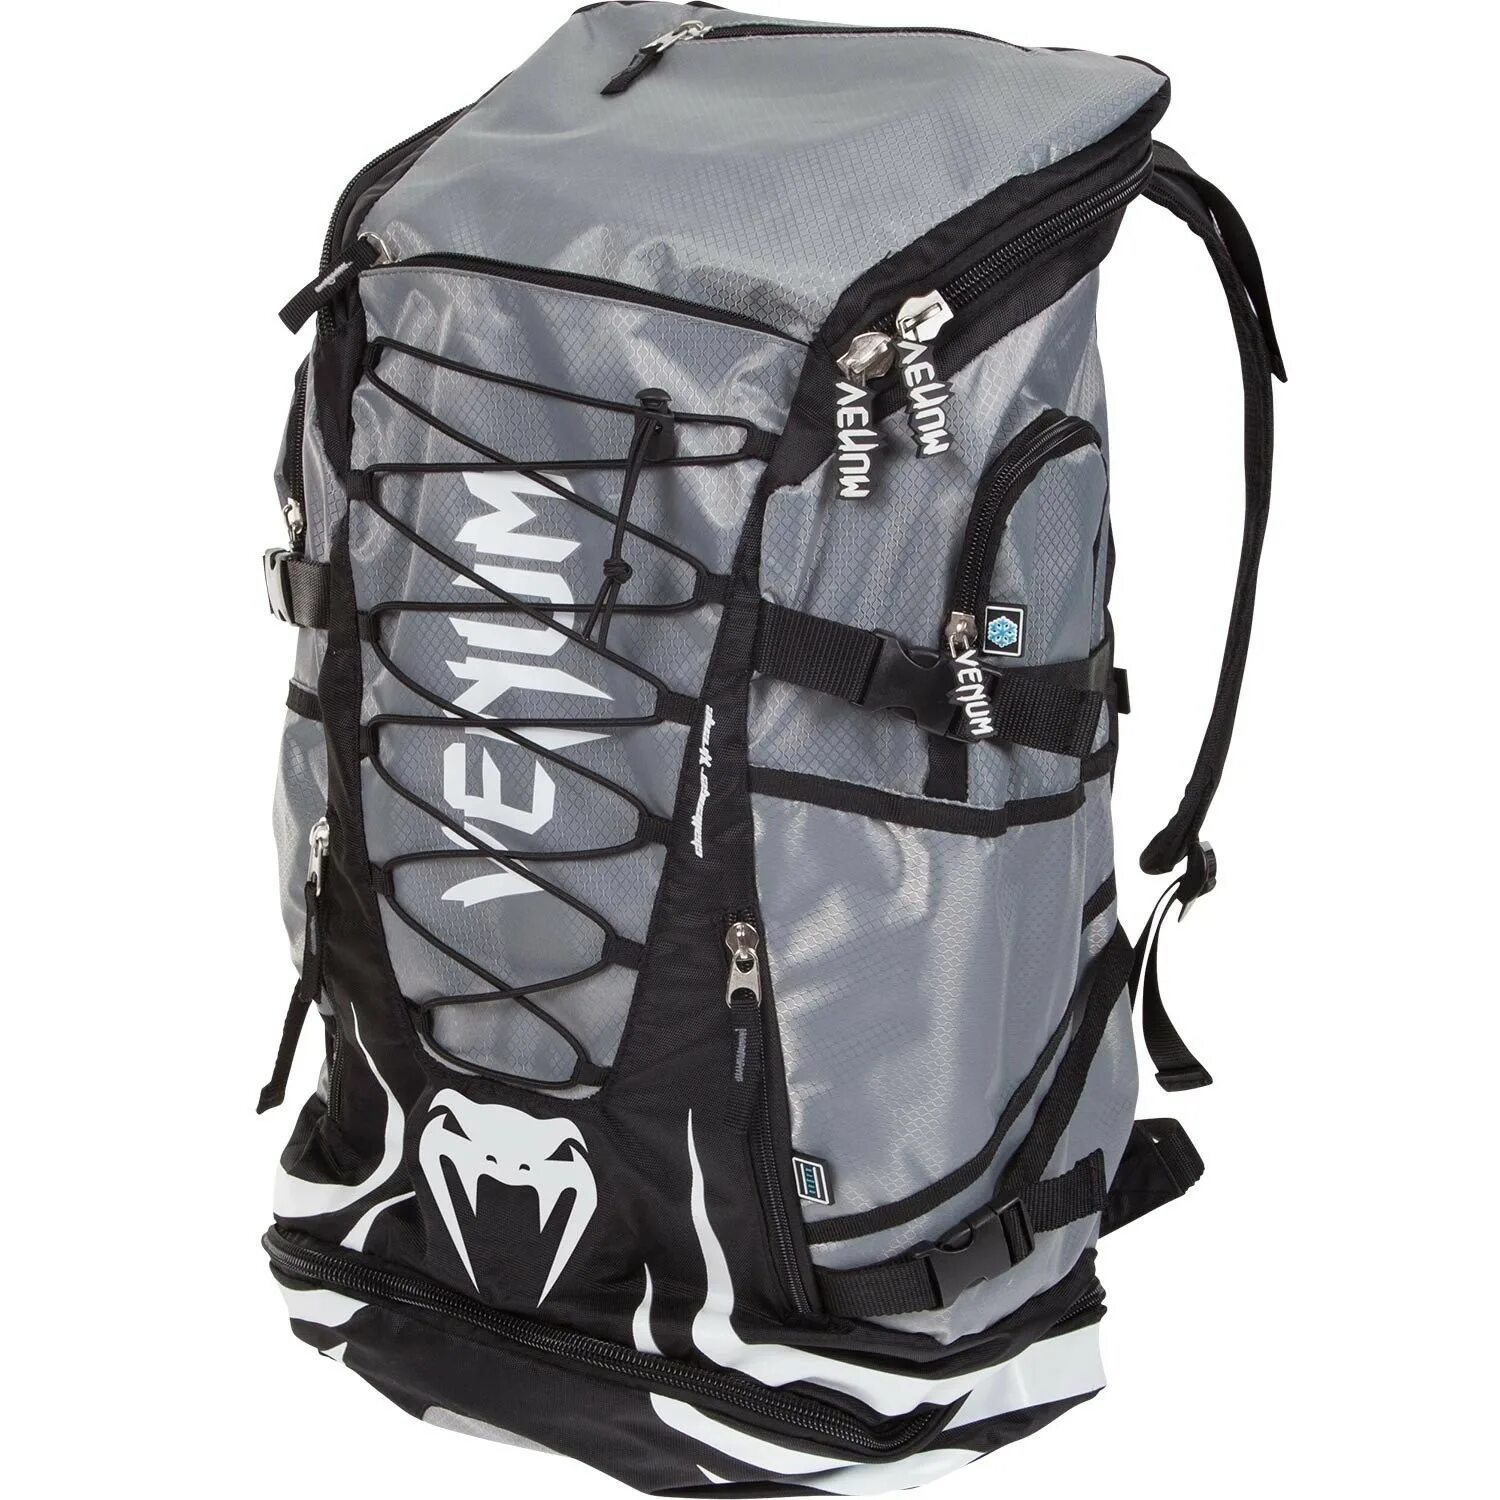 Рюкзак Venum Challenger Xtreme Black. Венум рюкзак спортивный. Рюкзак Venum Challenger Pro Black/Grey. Сумка рюкзак Венум.